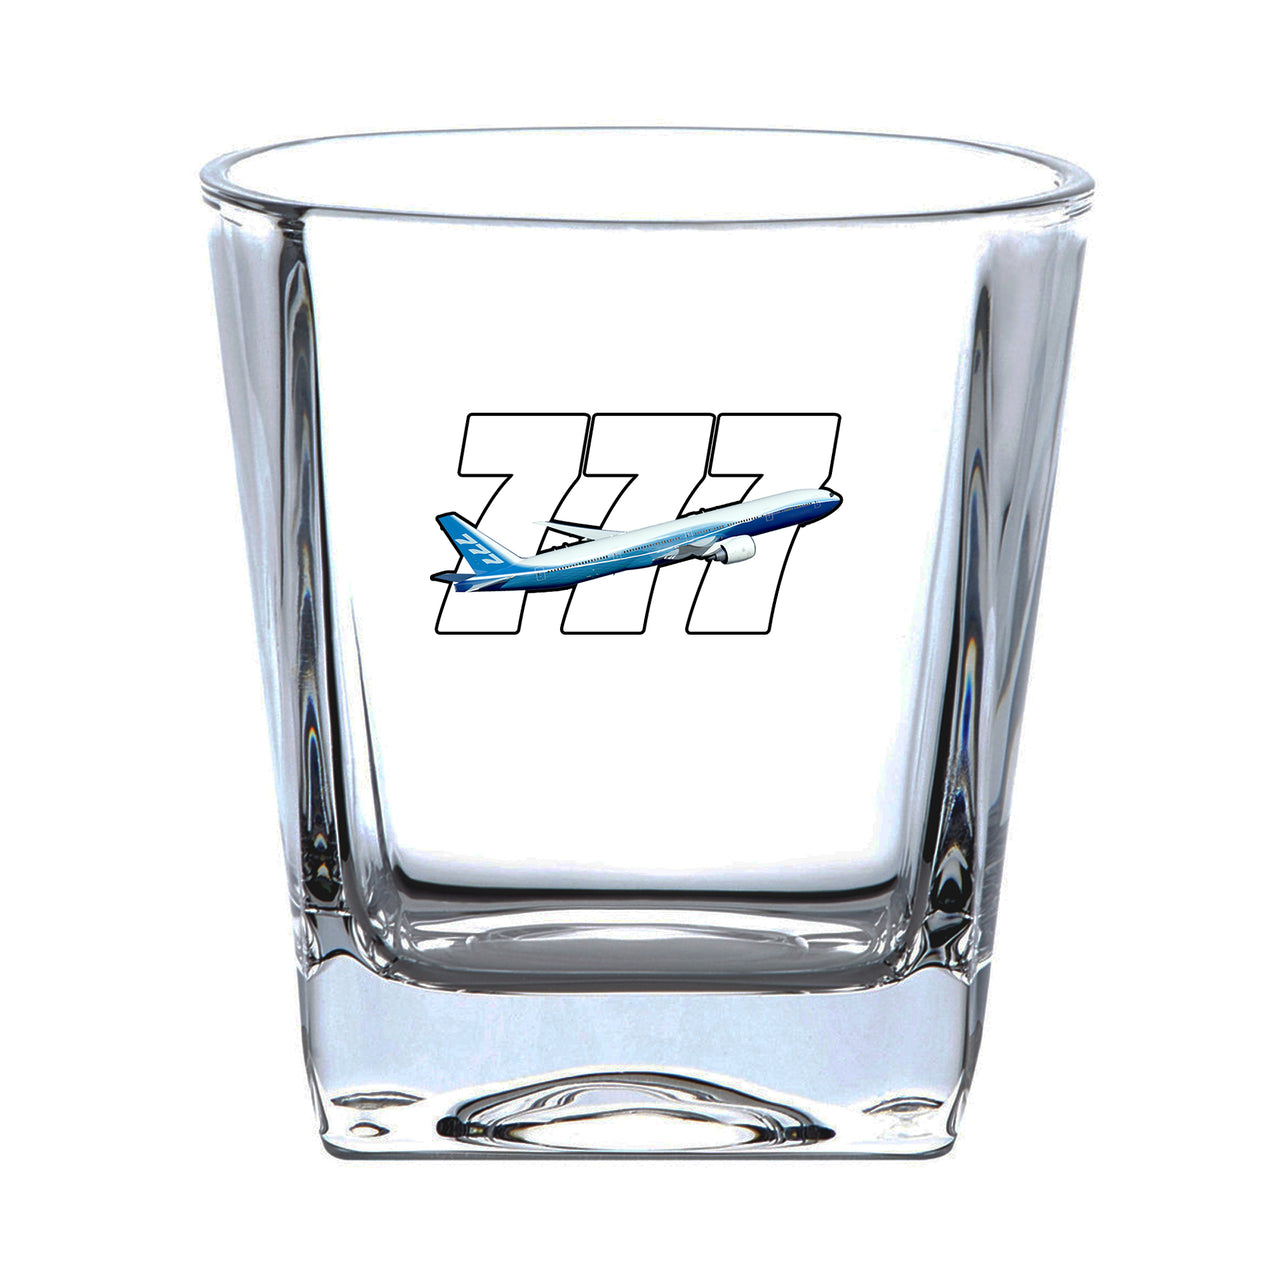 Super Boeing 777 Designed Whiskey Glass